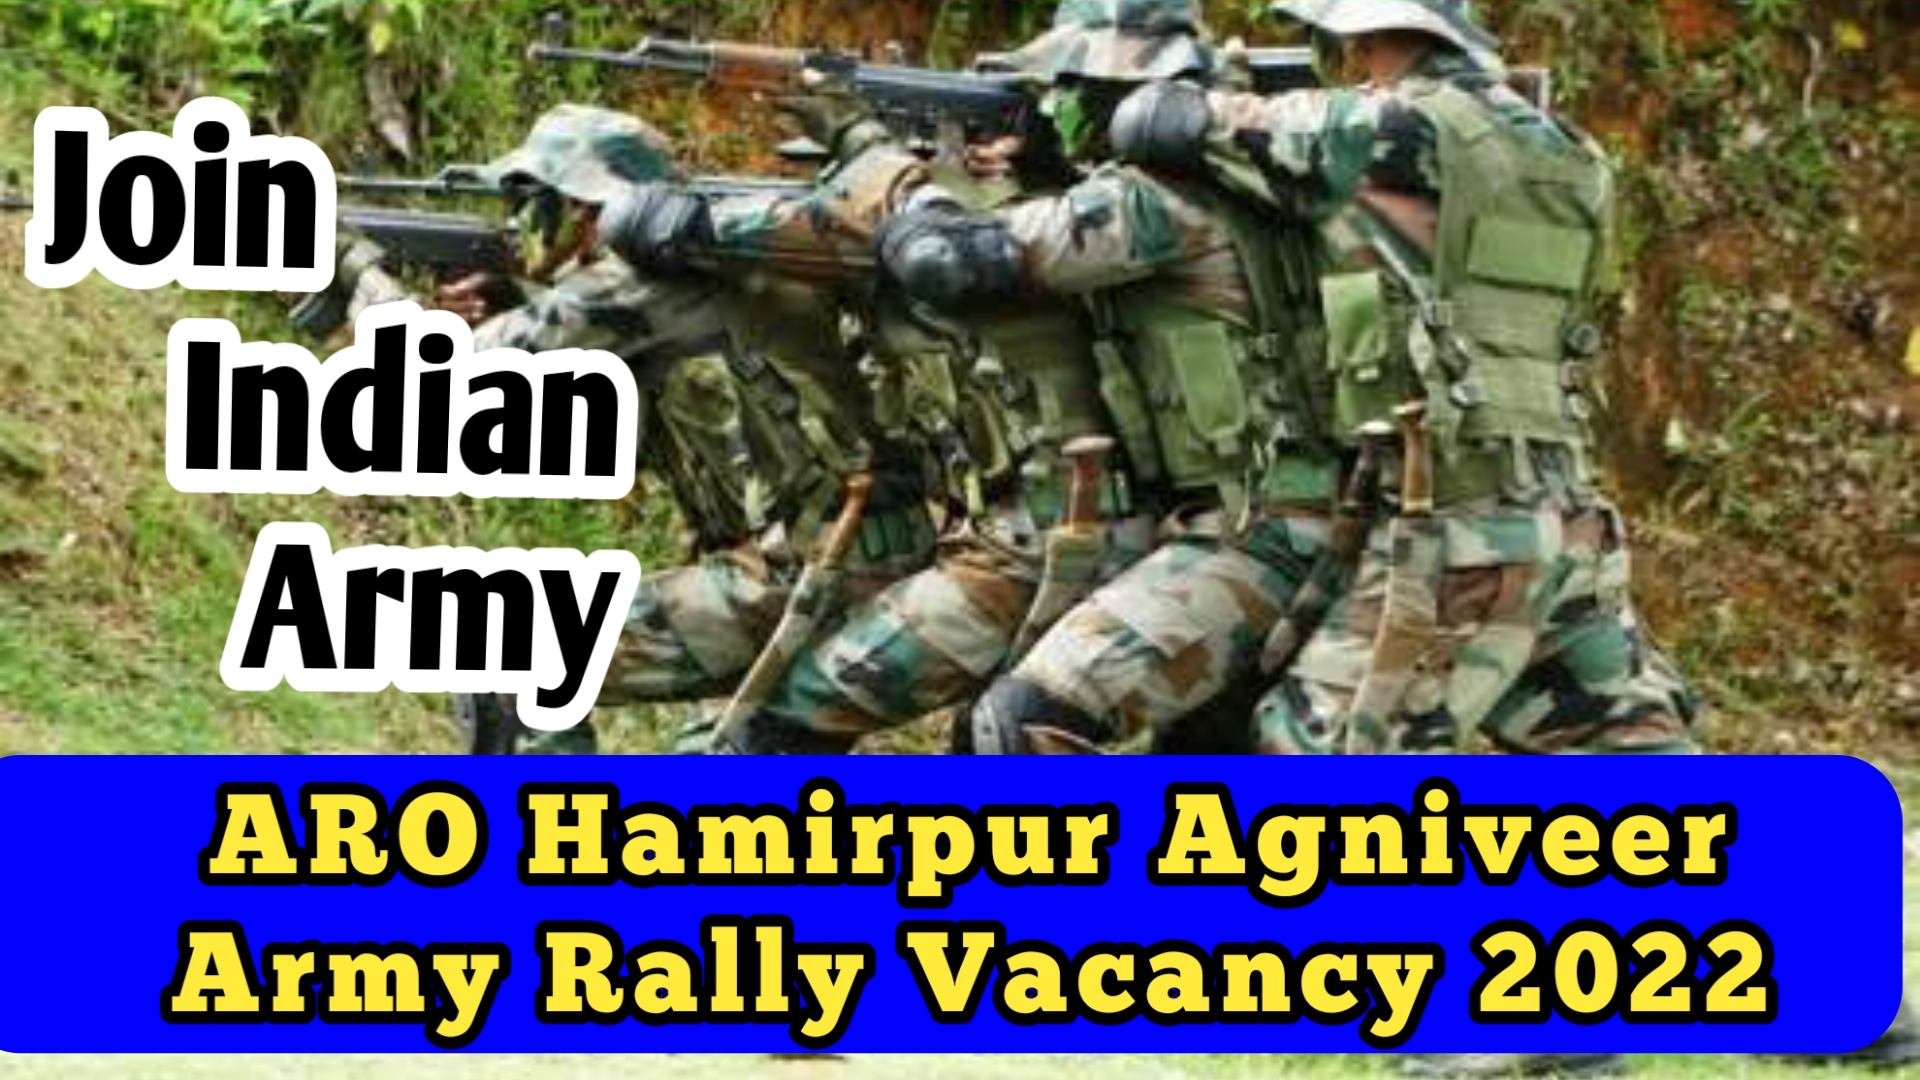 ARO Hamirpur Agniveer Army Rally Vacancy 2022